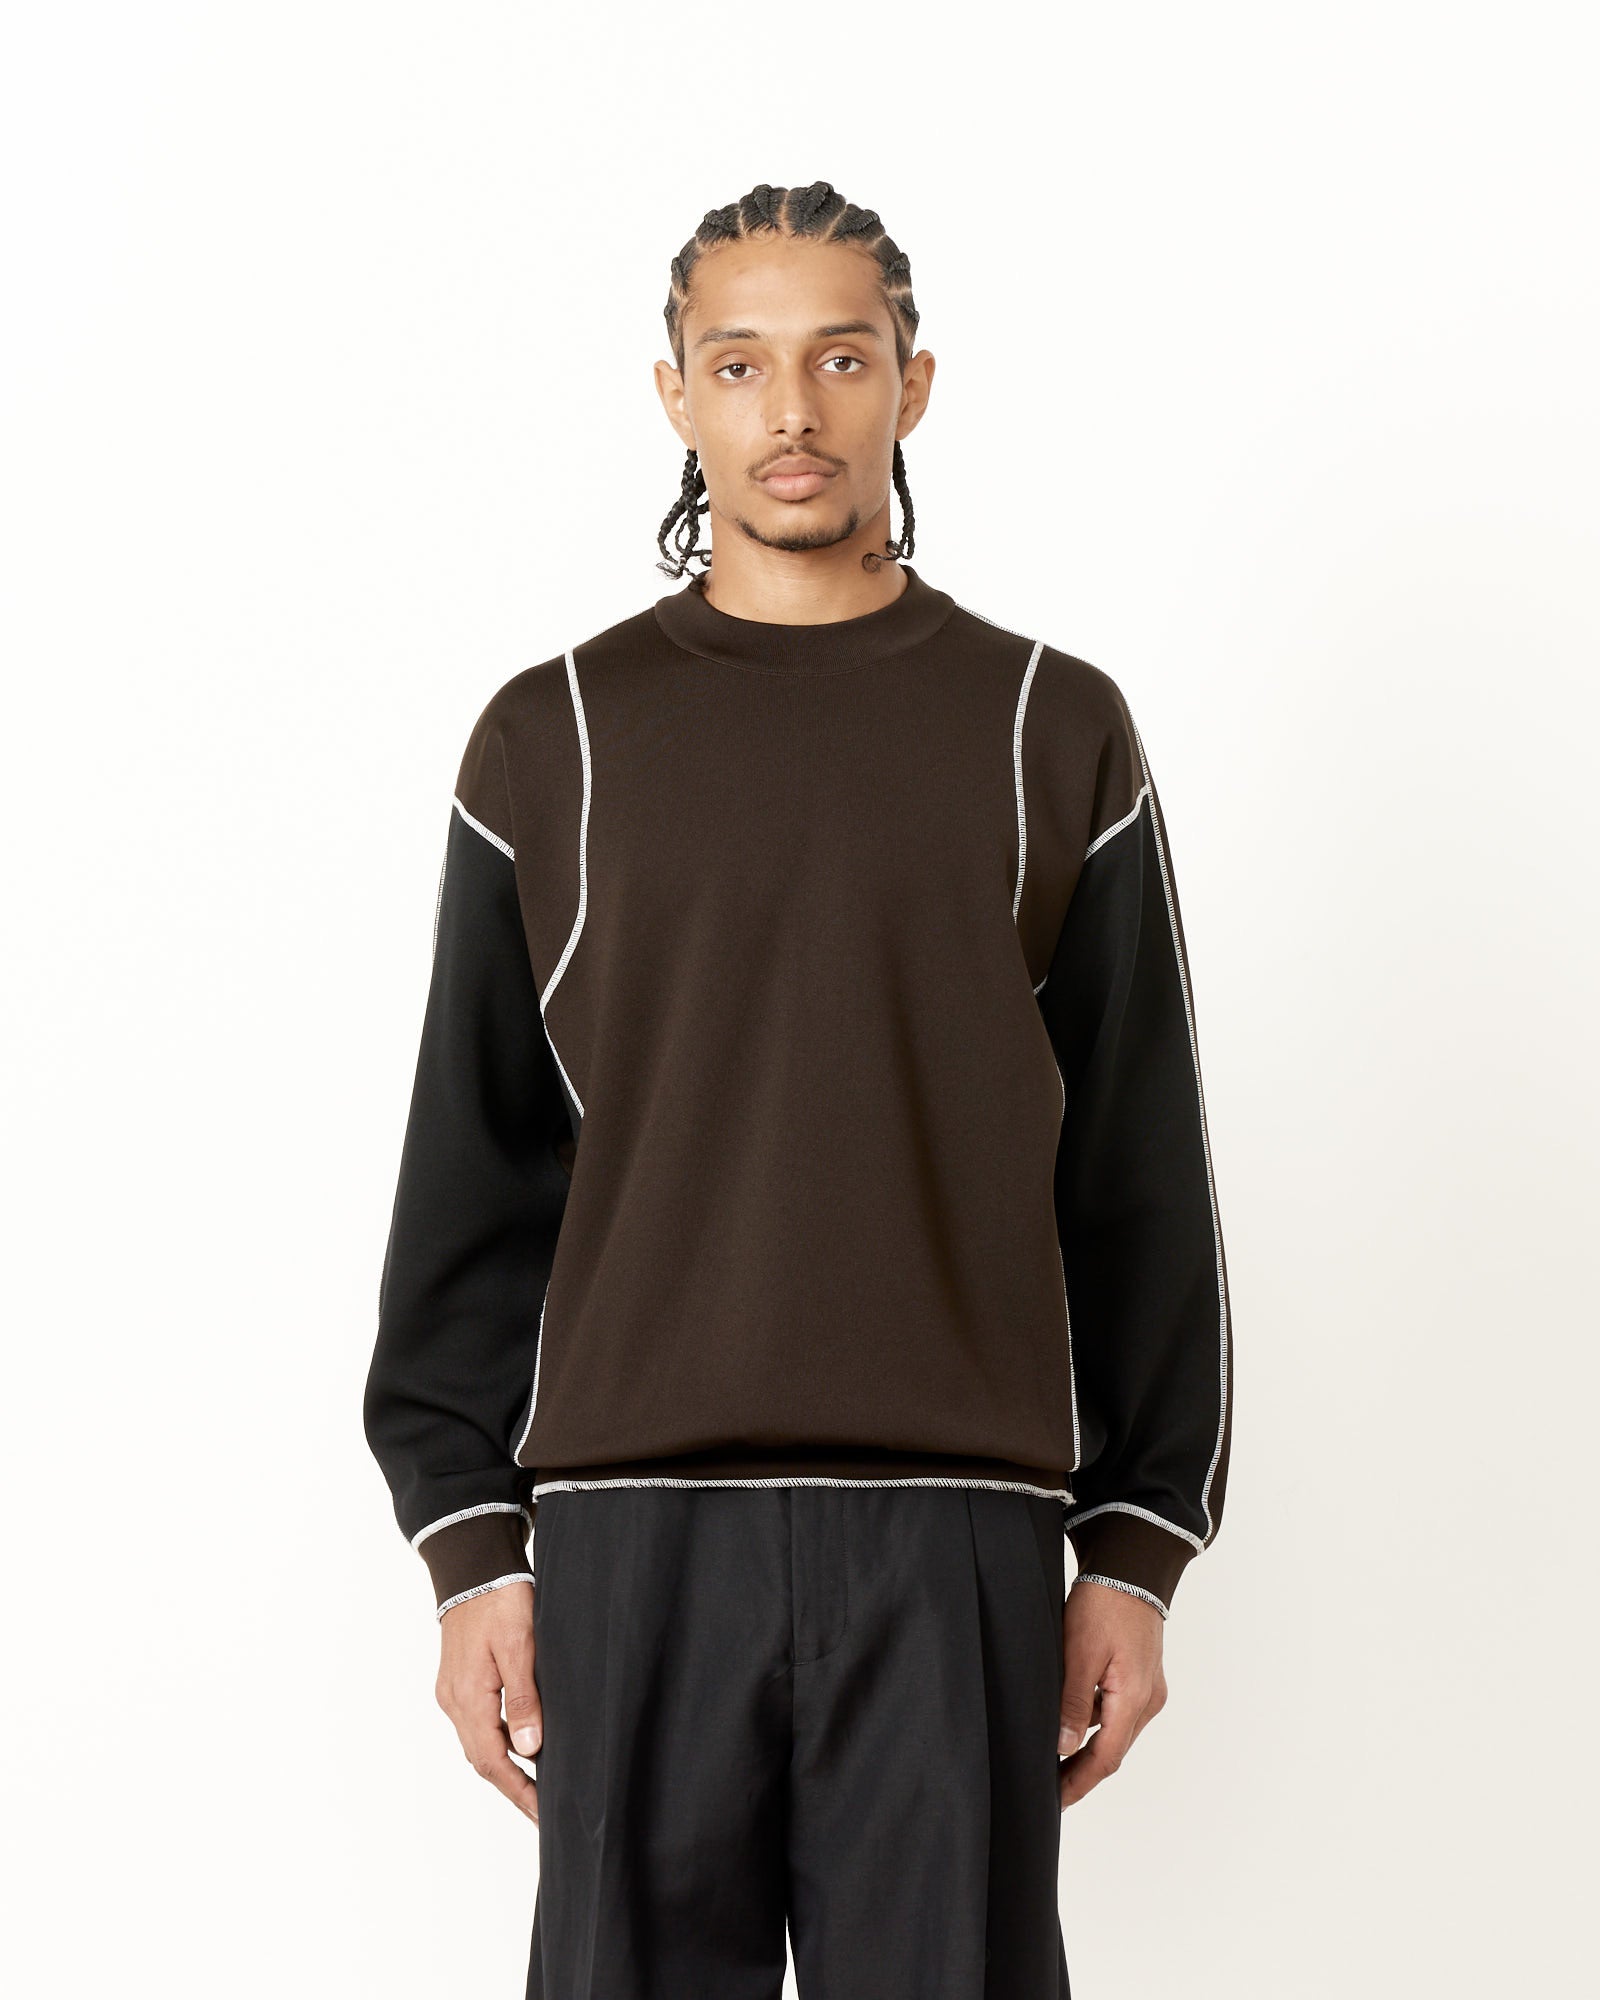 St. 861 Sweater in Military Khaki/Black